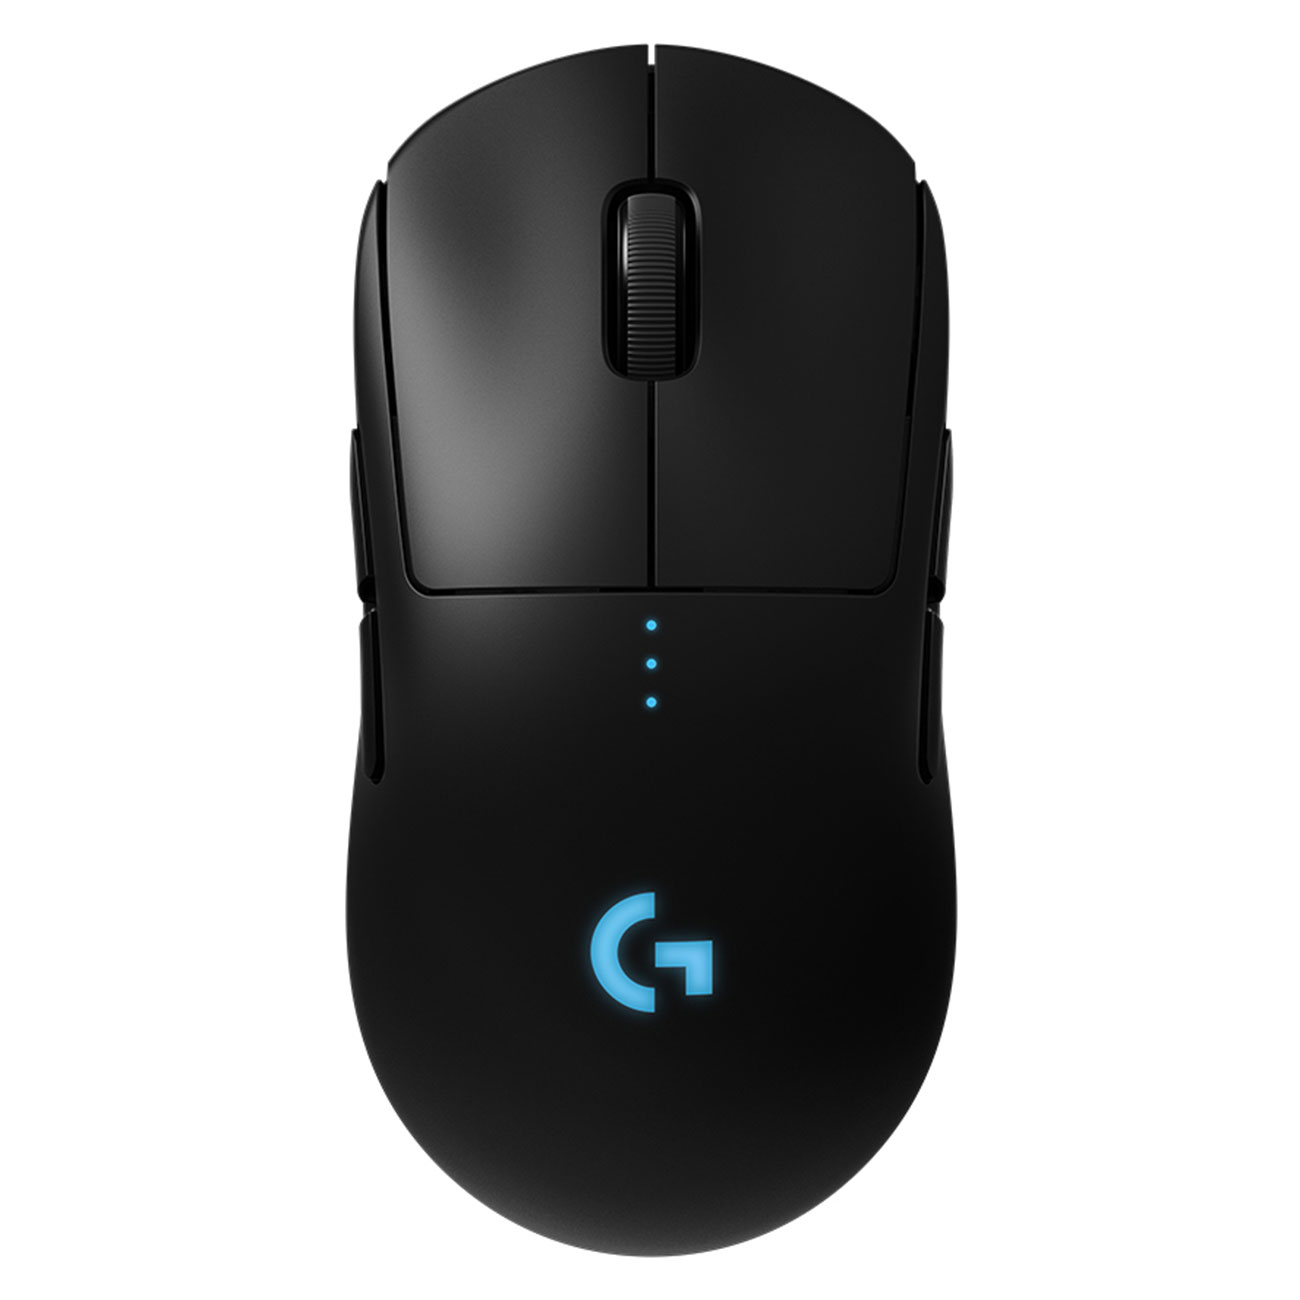 Logitech G Pro Wireless Gaming Mouse (Noir) pas cher - HardWare.fr